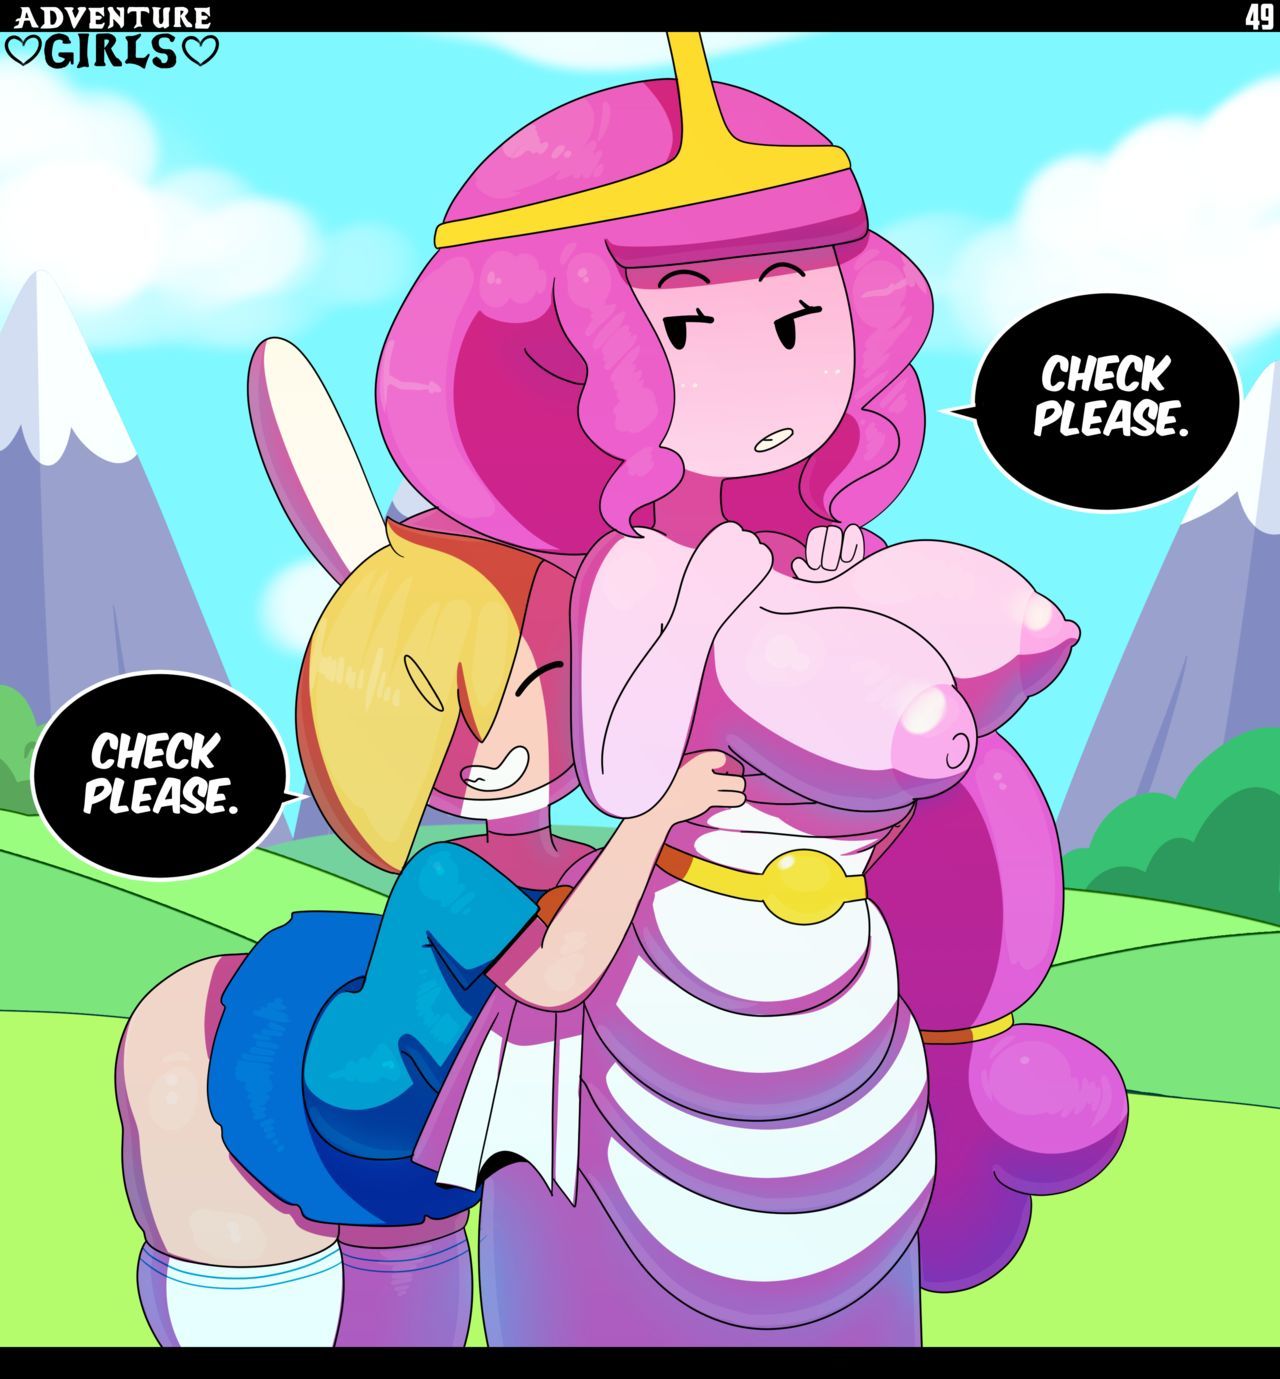 Adventure Girls - Somescrub [Adventure Time] page 49